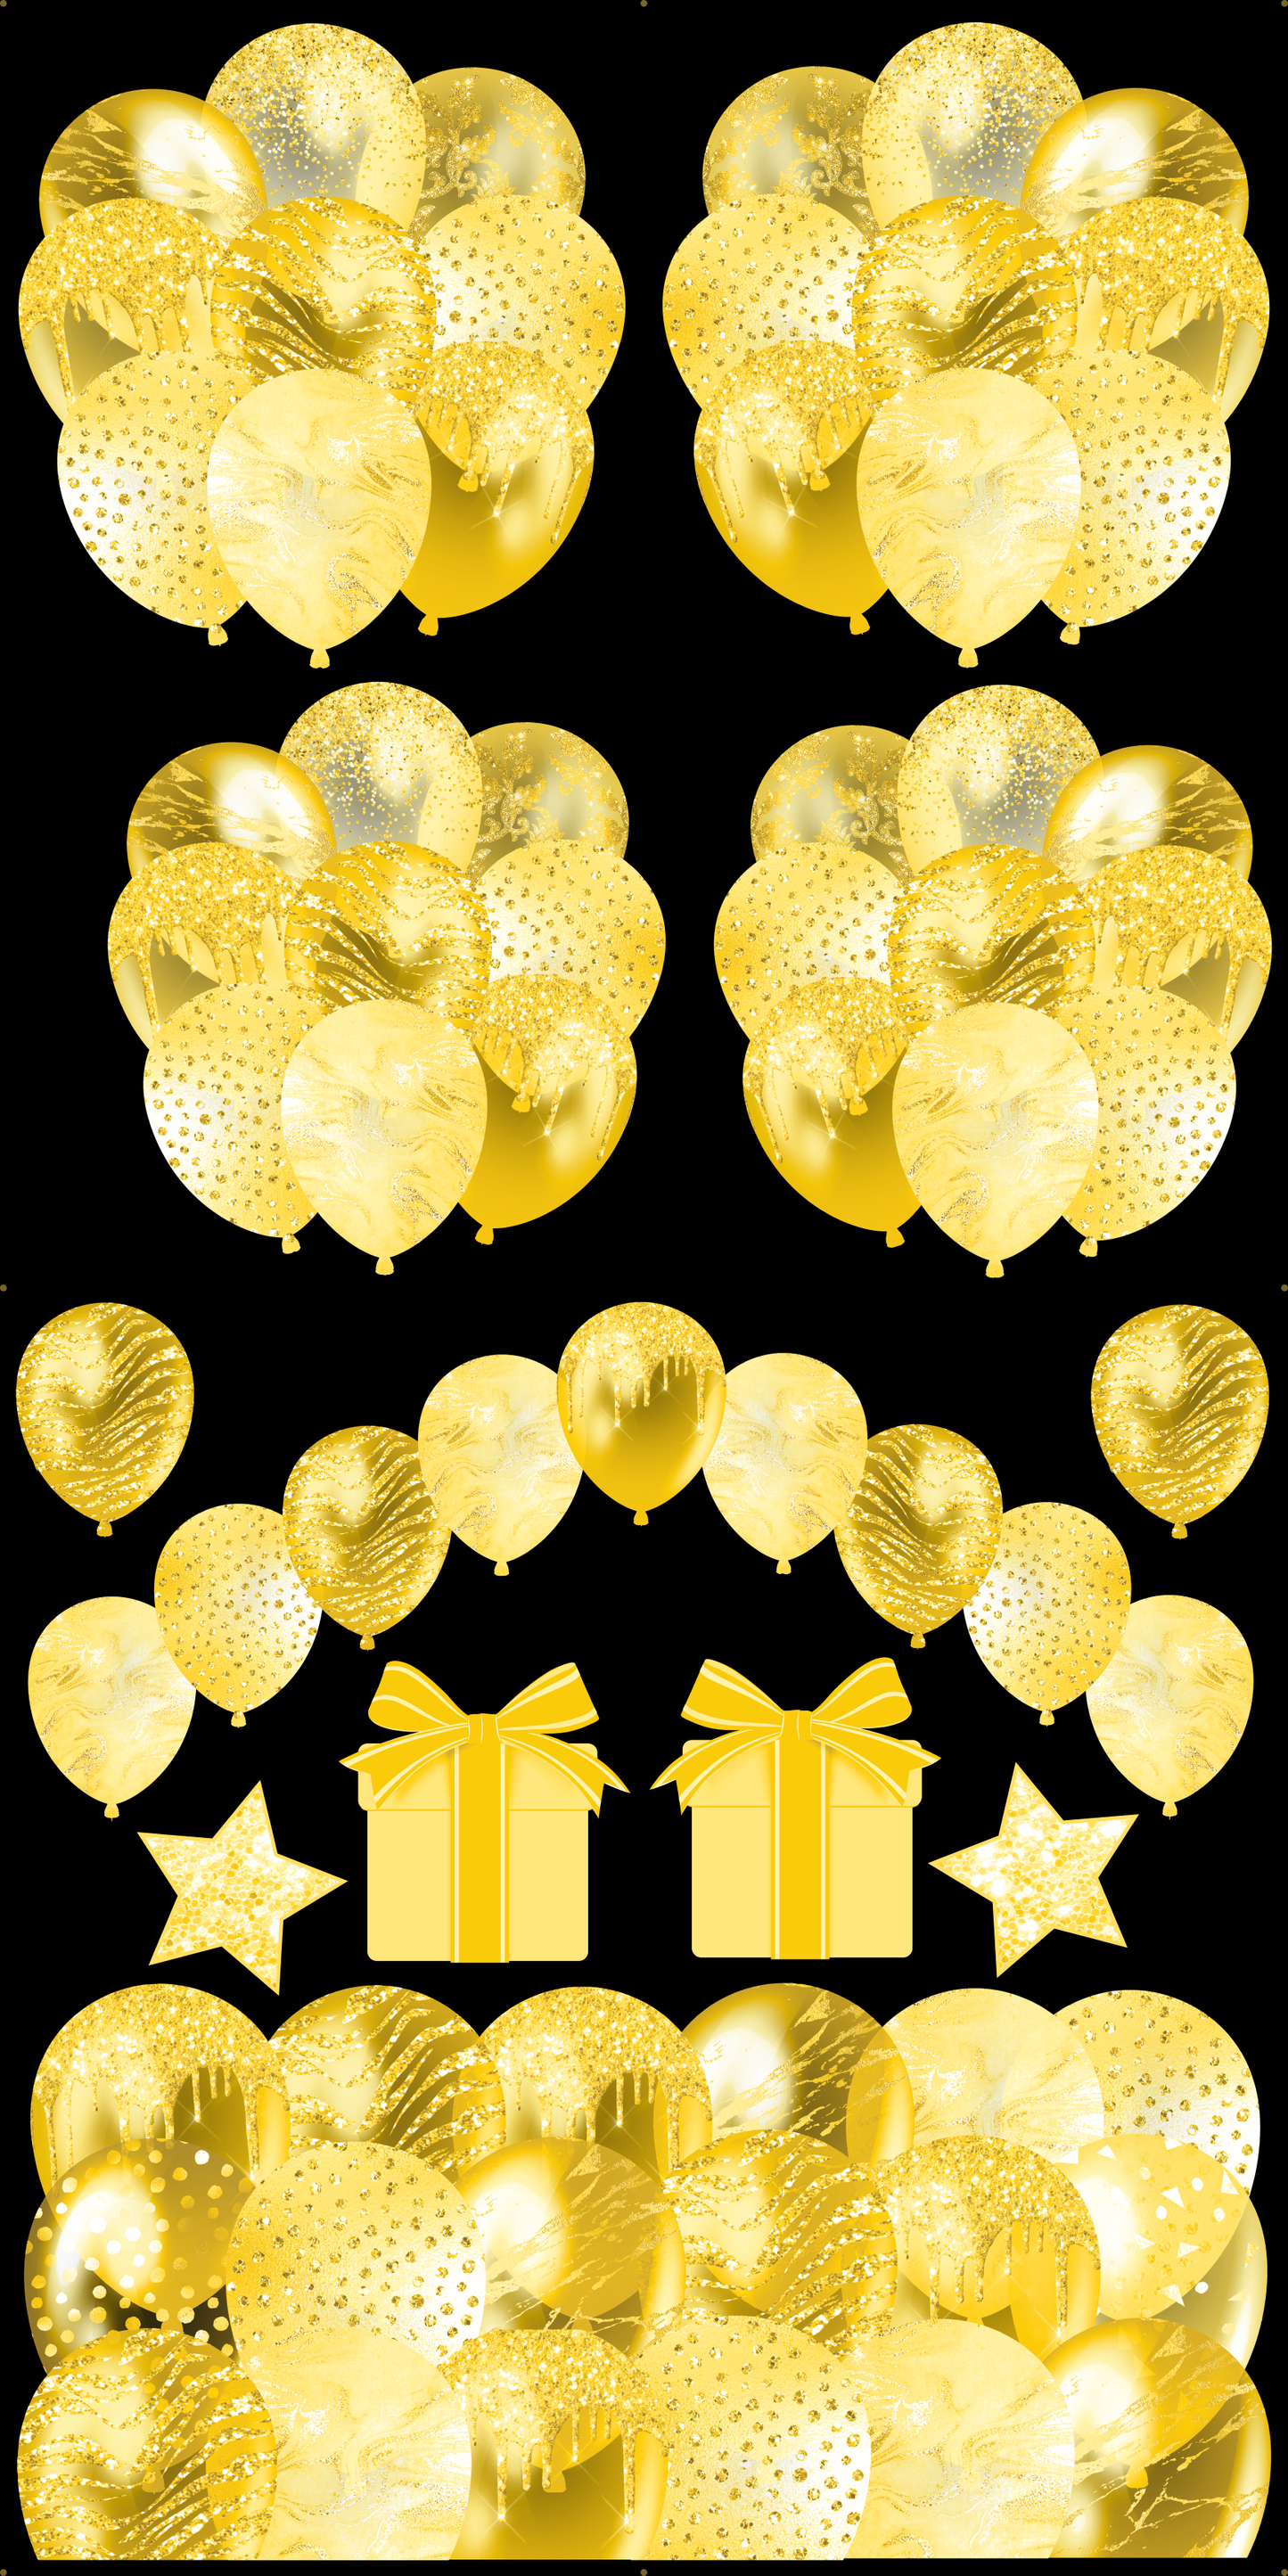 Solid Color Balloon Sheets - Yellow Set 1 - 4 Balloon Bunches, Balloon Arch, Balloon Skirt, 2 Presents, & 2 Stars